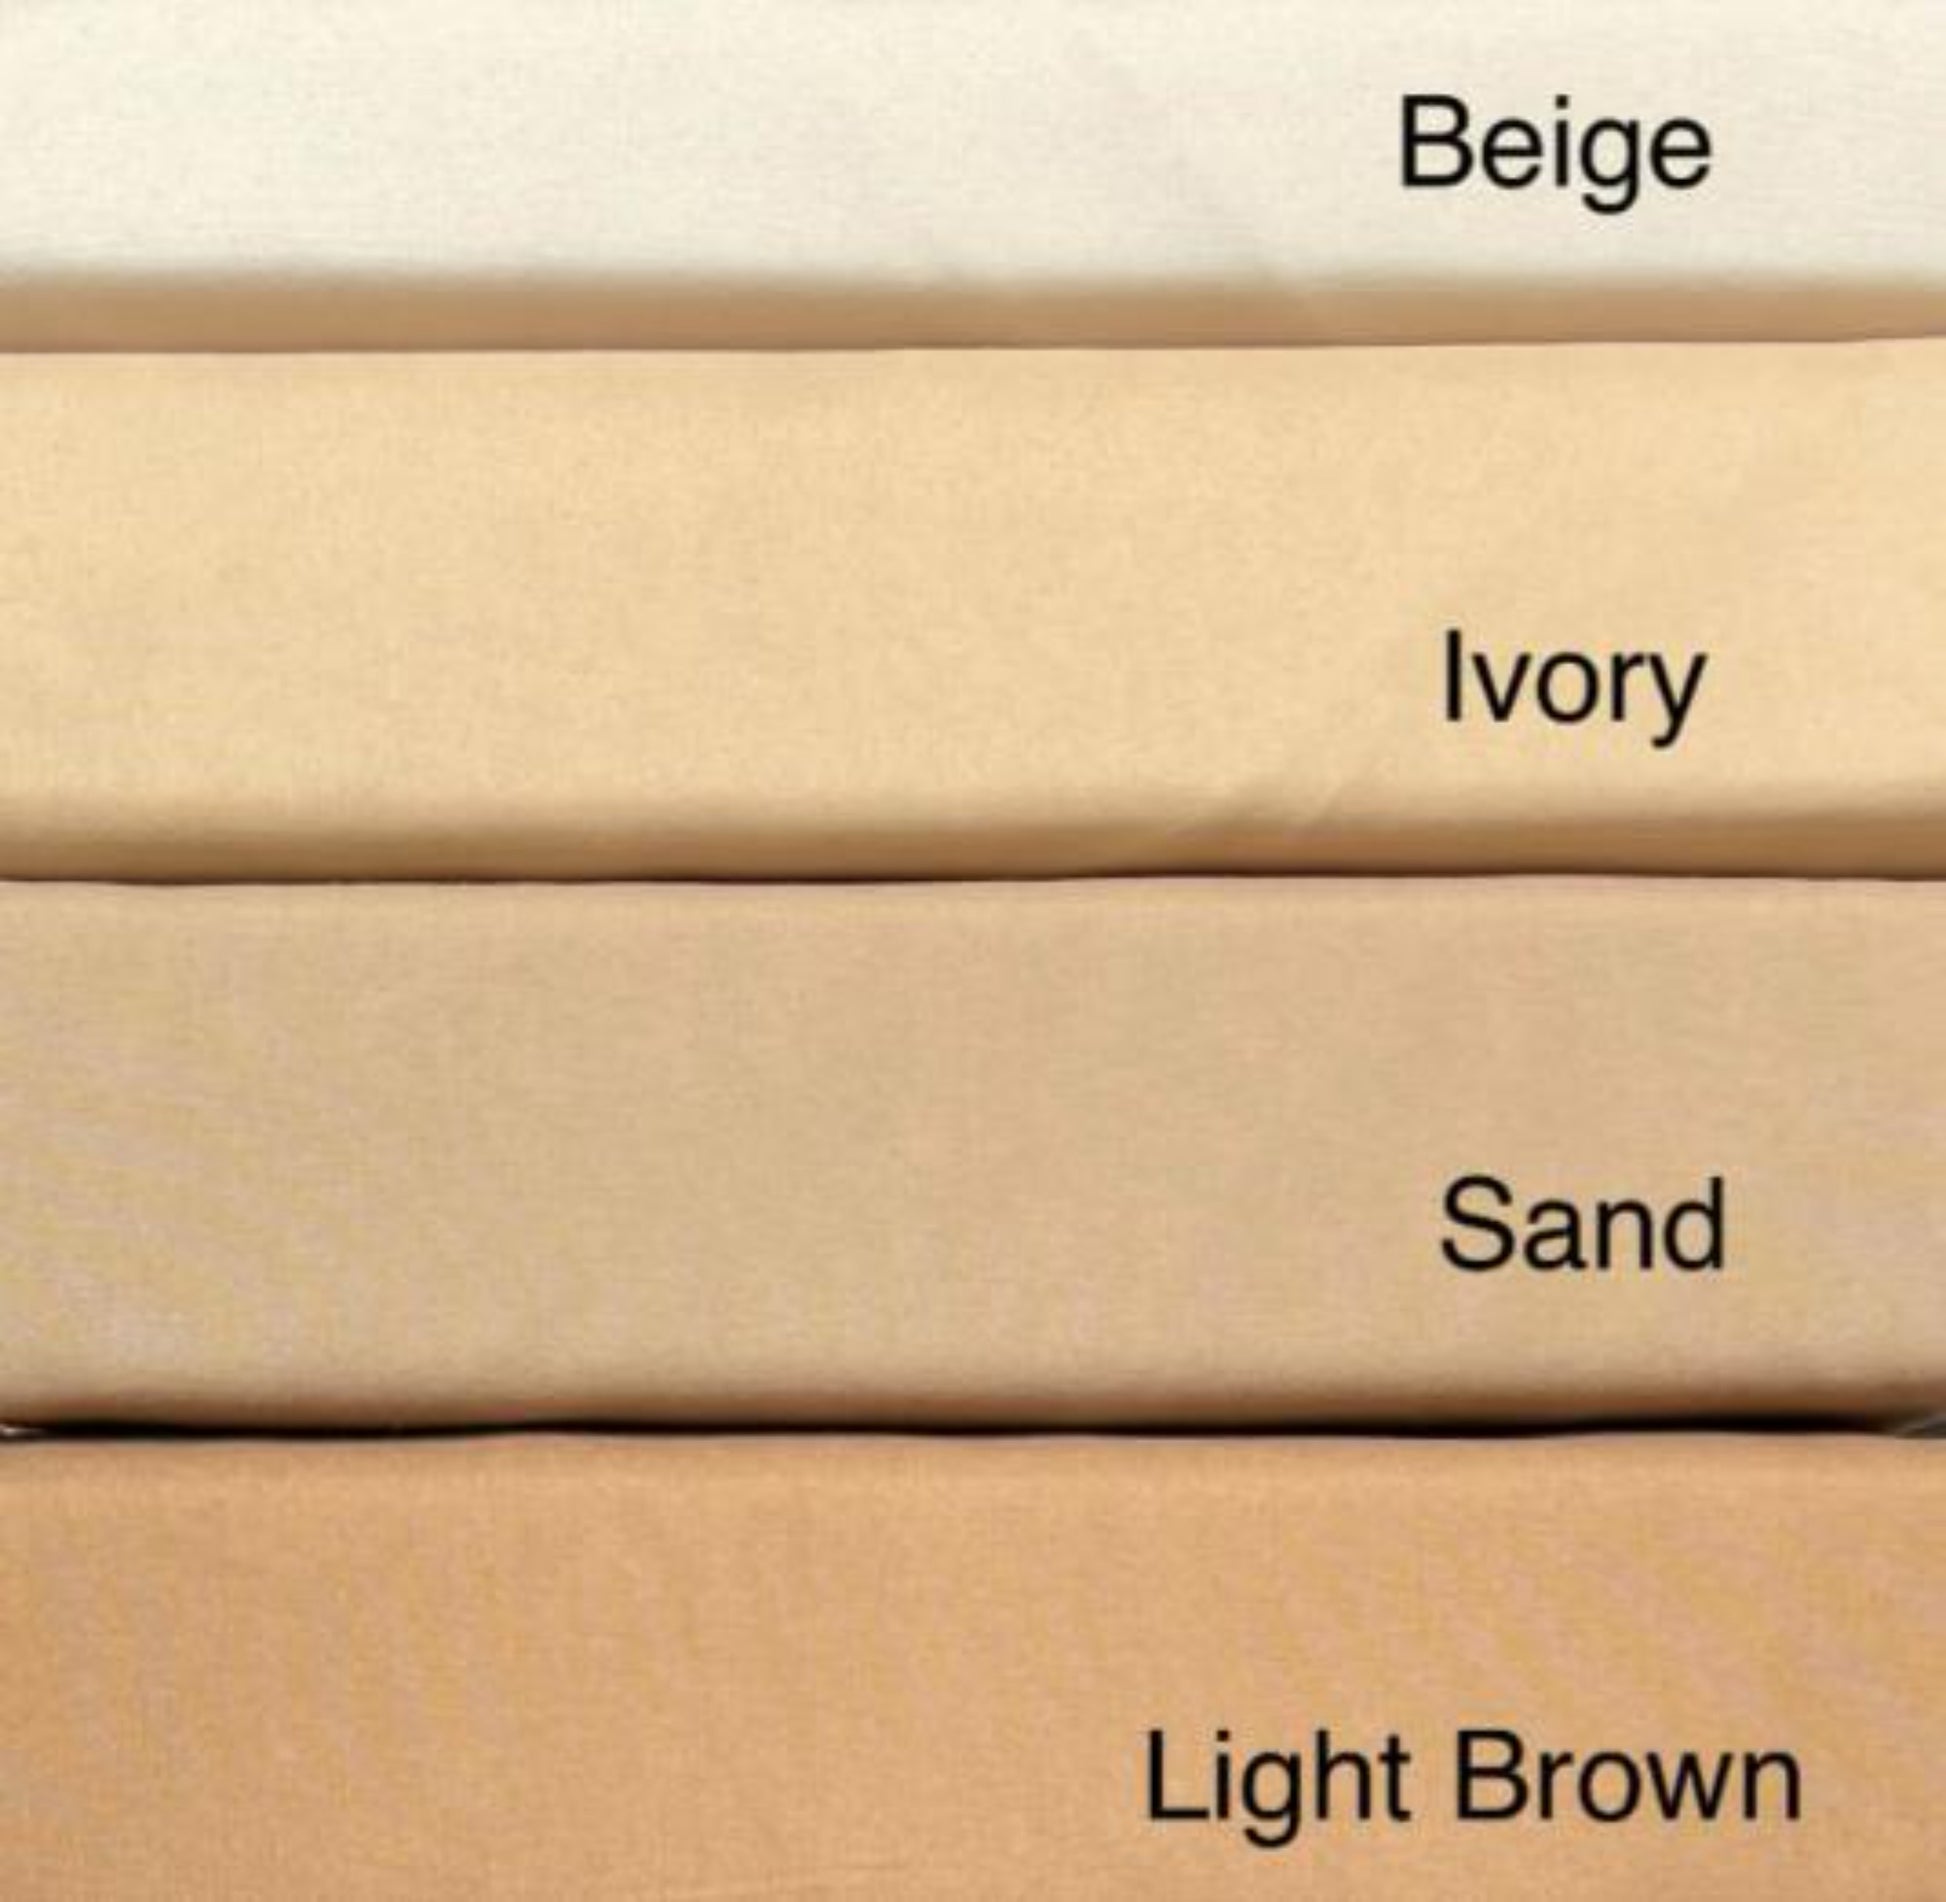 Duvet Cover Set (100% Polyester) - Beige, Ivory, Sand, Light Brown